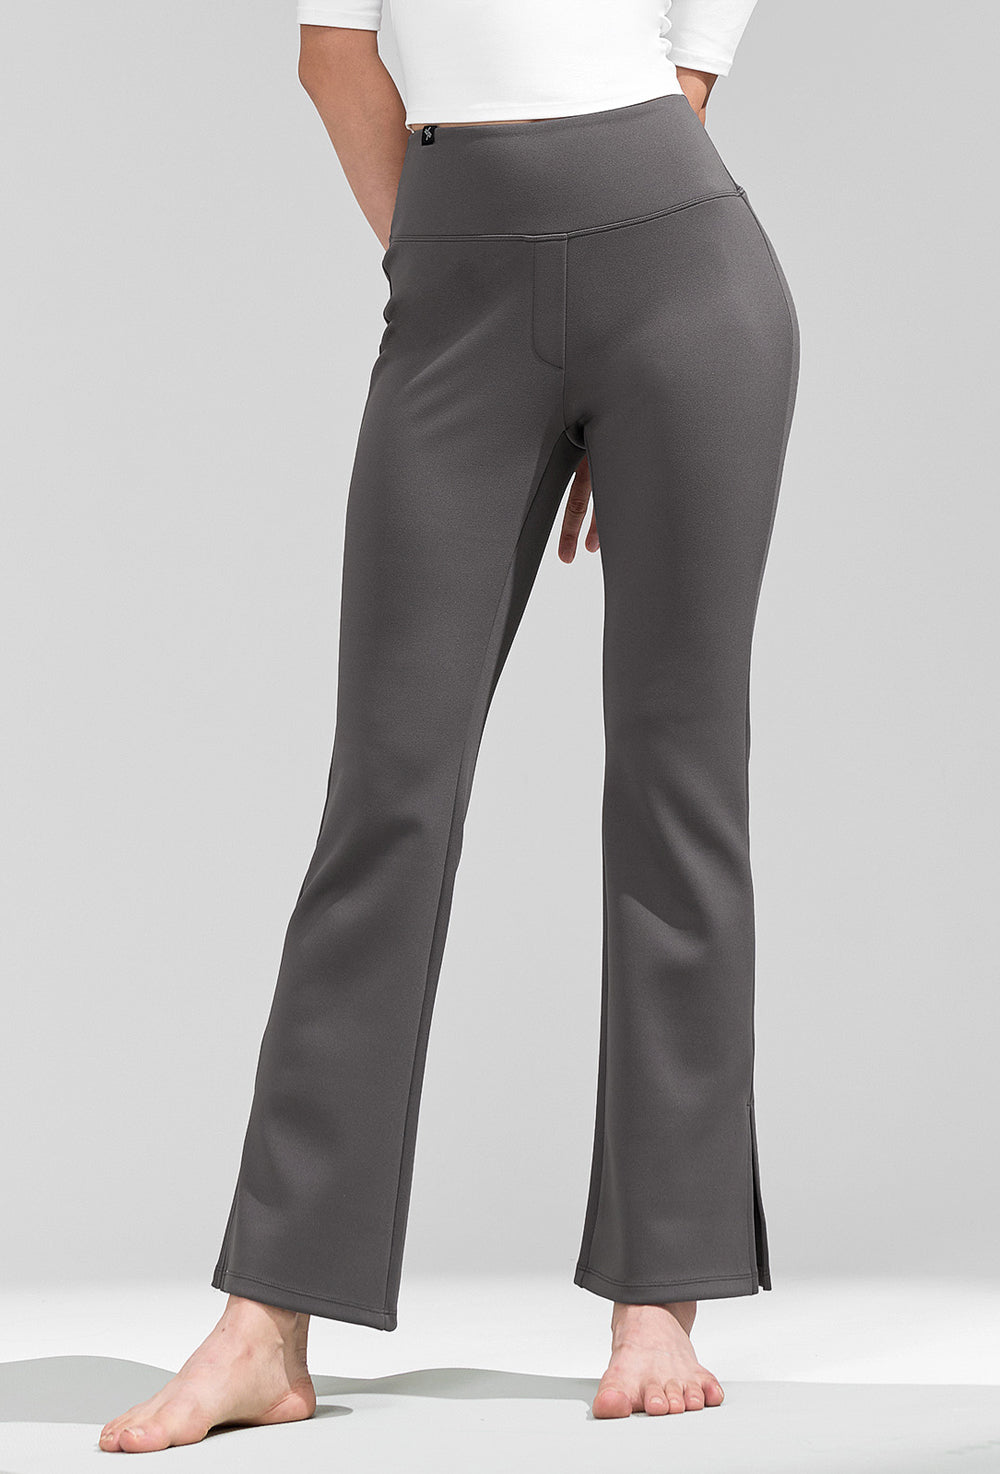 Stretch Formal Boots Cut Slit Pants - Pebble Gray